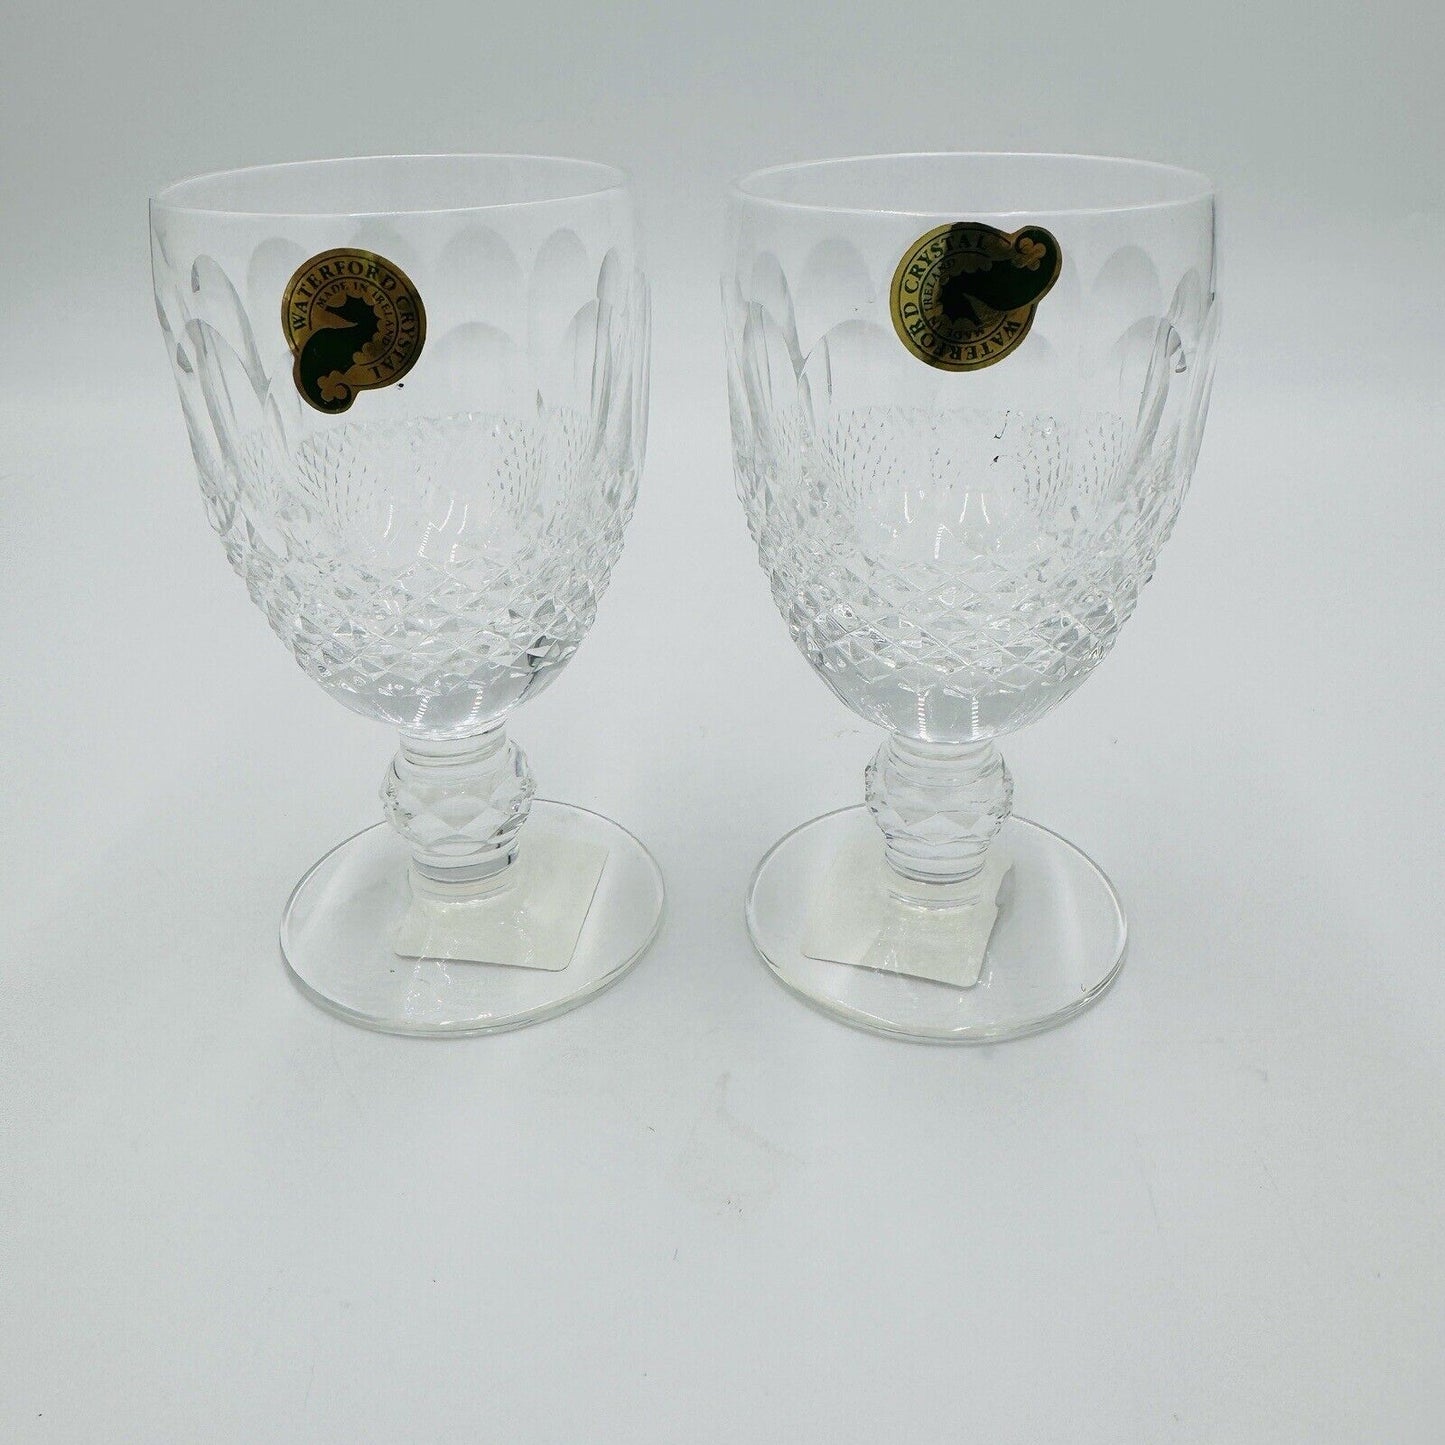 Waterford Colleen Claret Wine Glasses Set Vintage Crystal 2 Pieces Short Stem